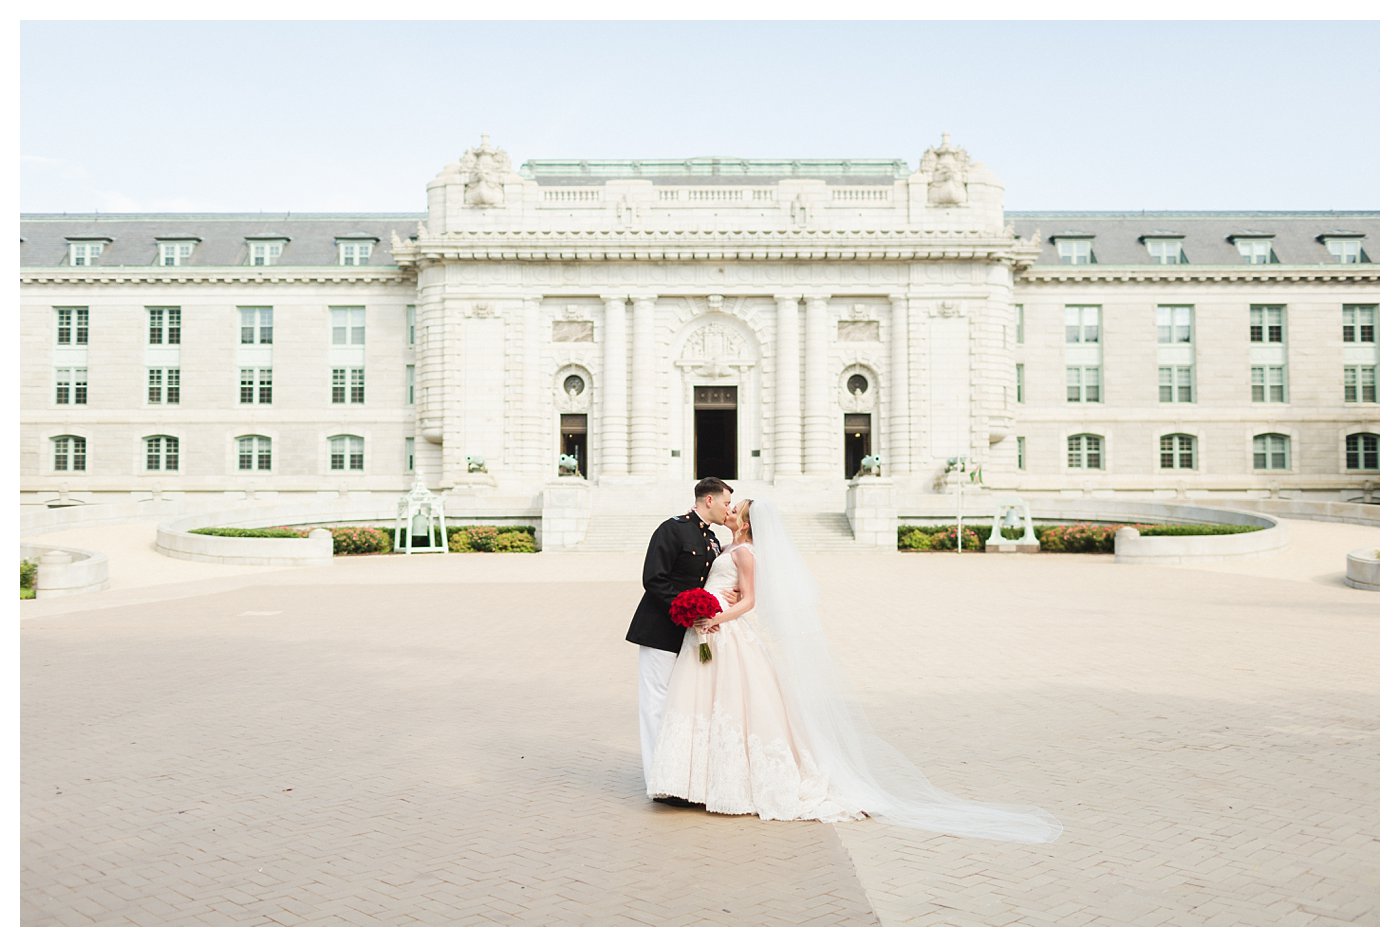 United States Naval Academy Wedding Photography by Amanda and Grady Photogrpahy